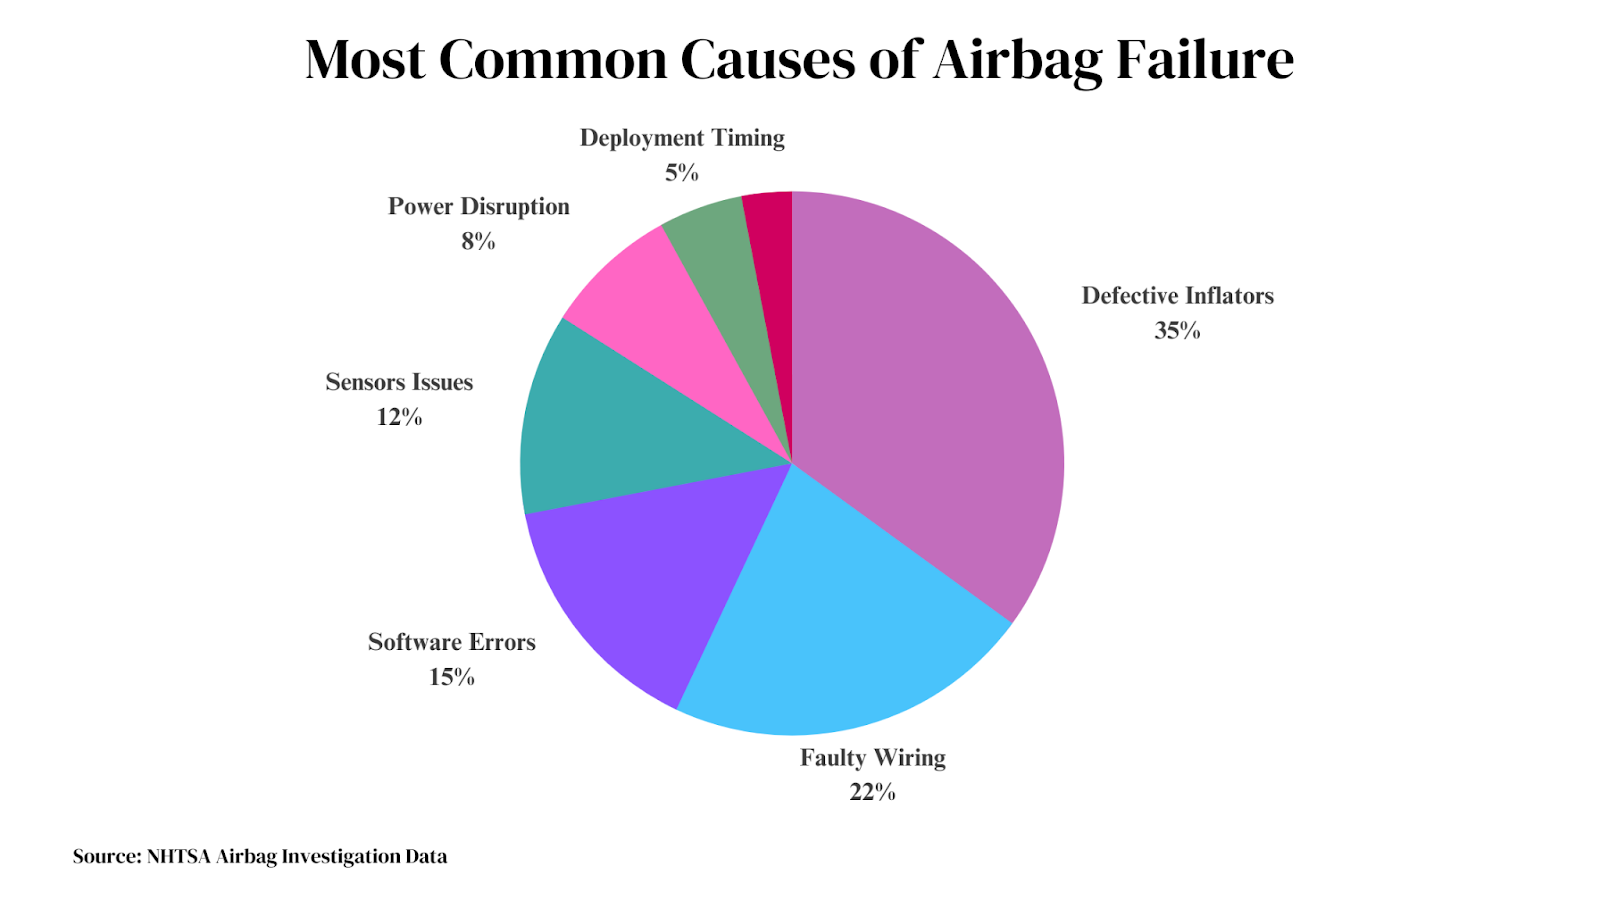 Data source: NHTSA Airbag Investigation Data